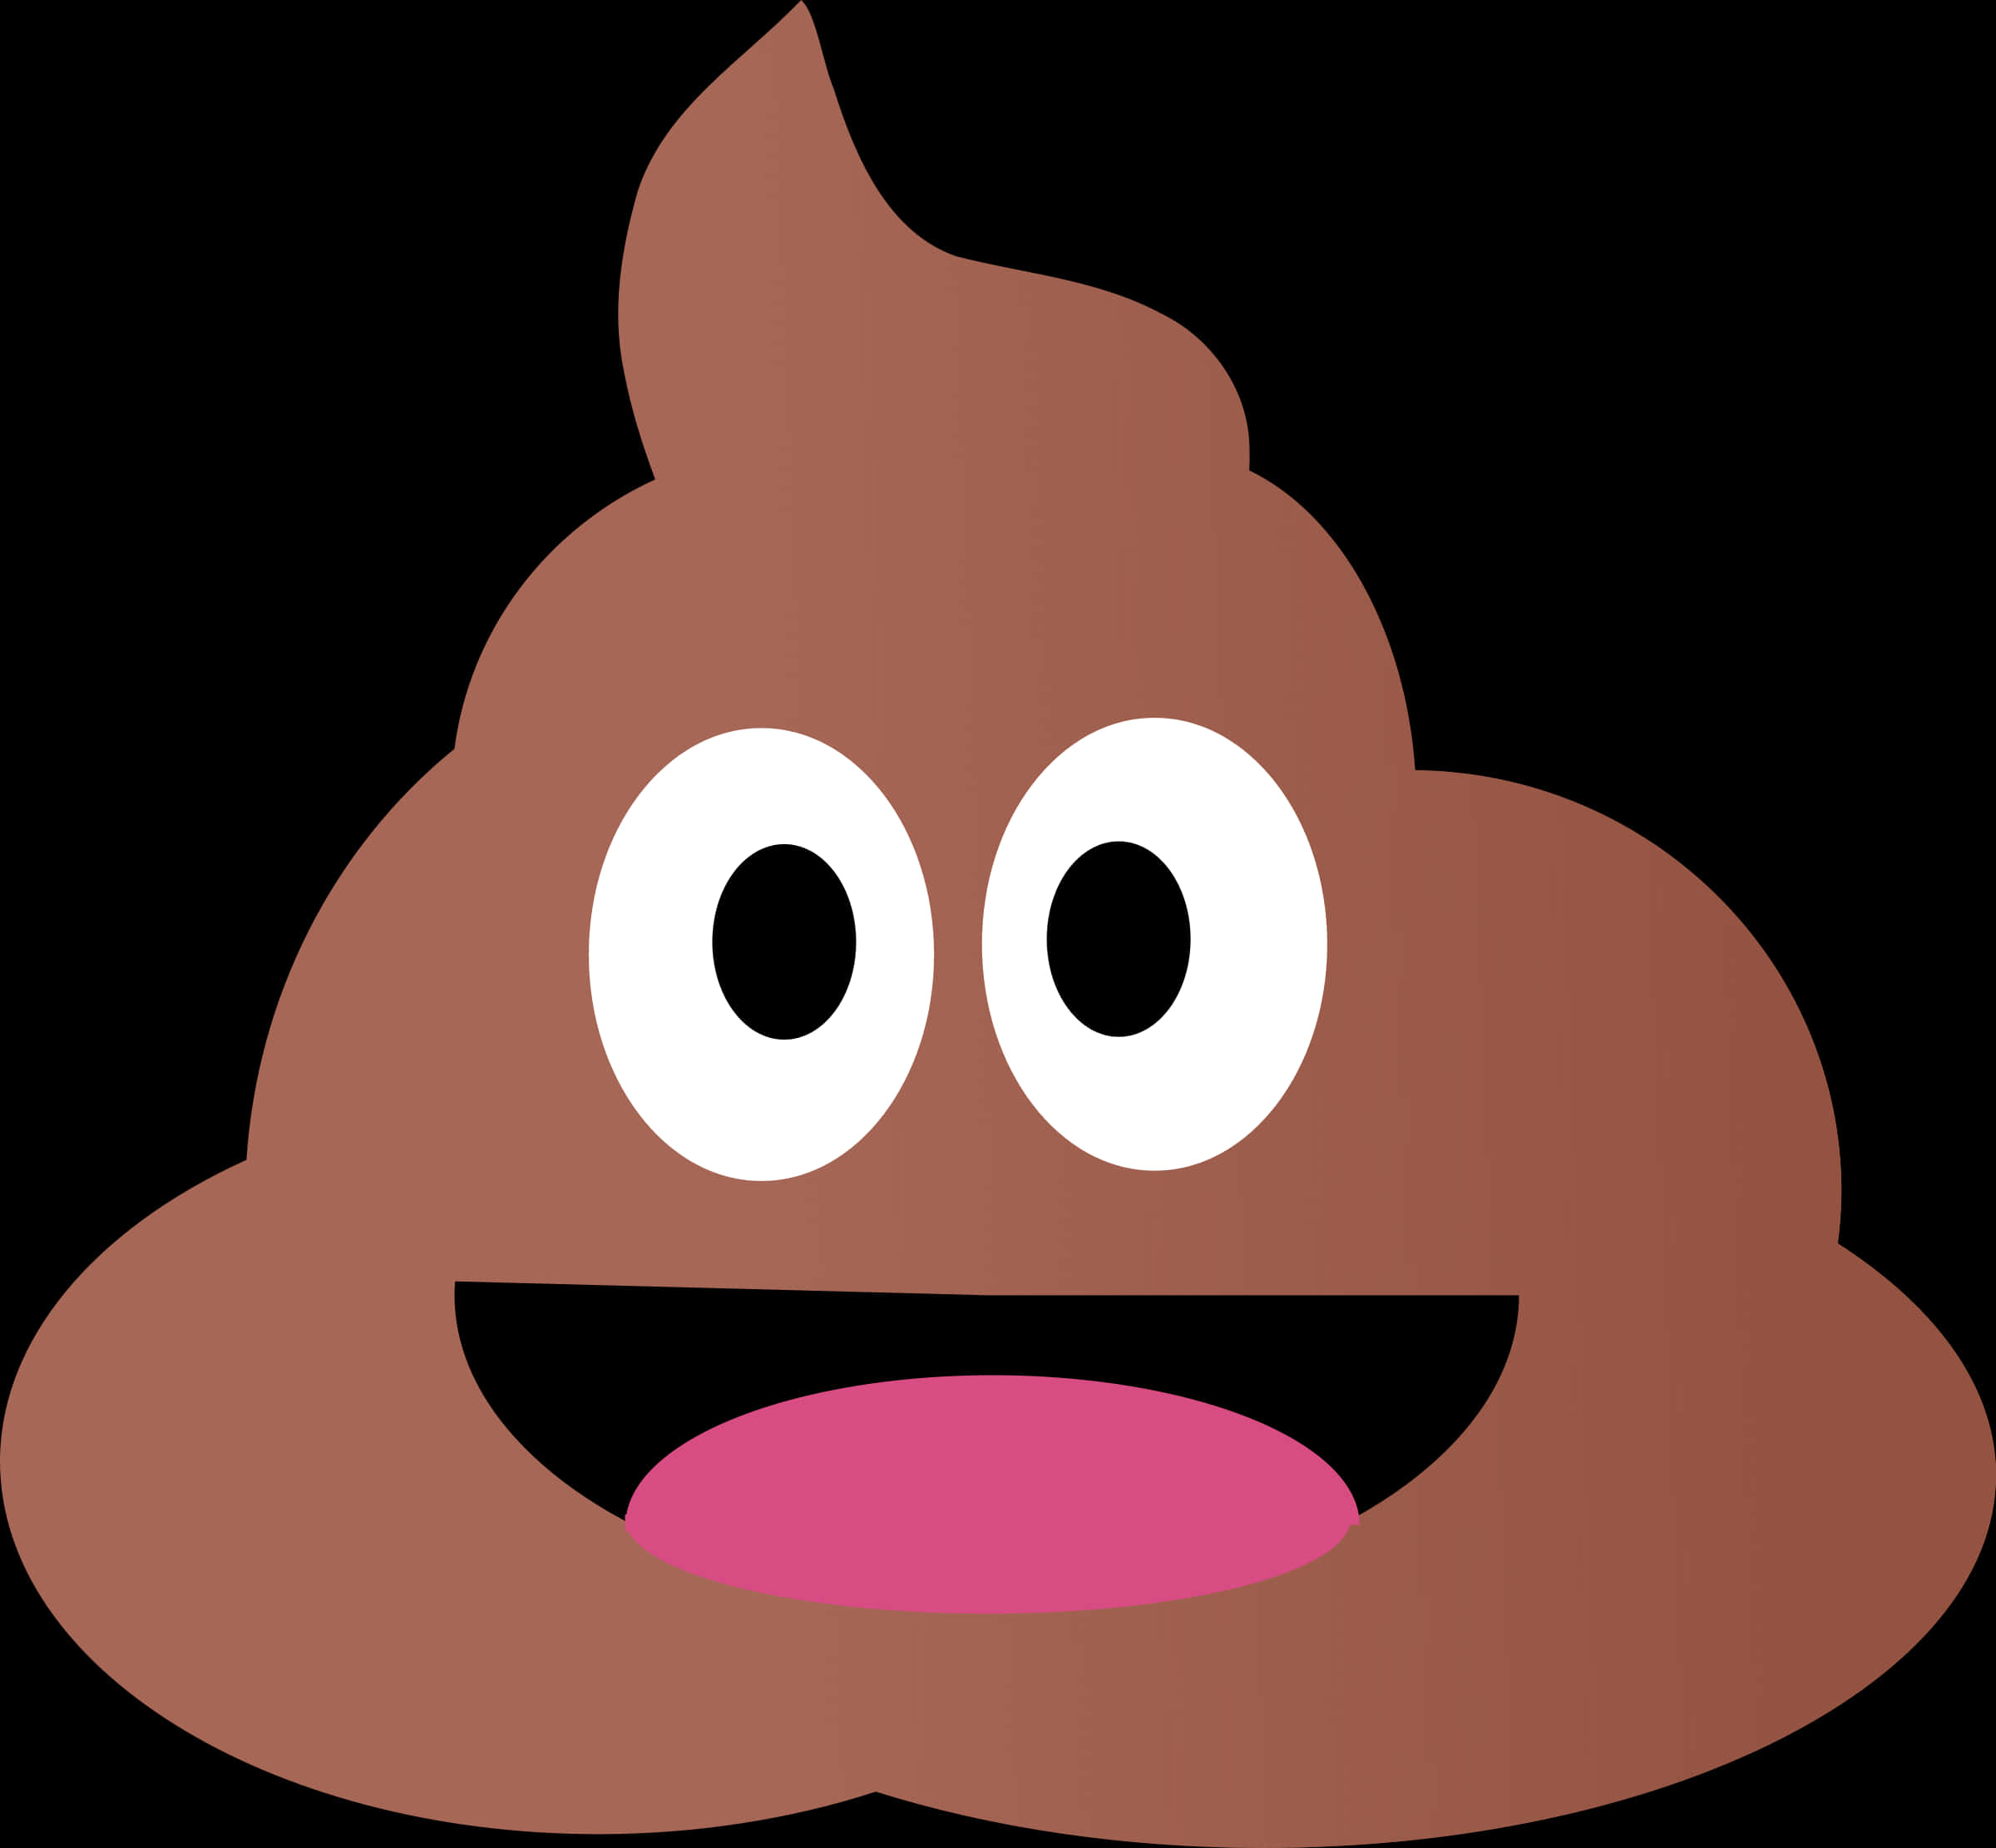 A Cartoon Of A Poop